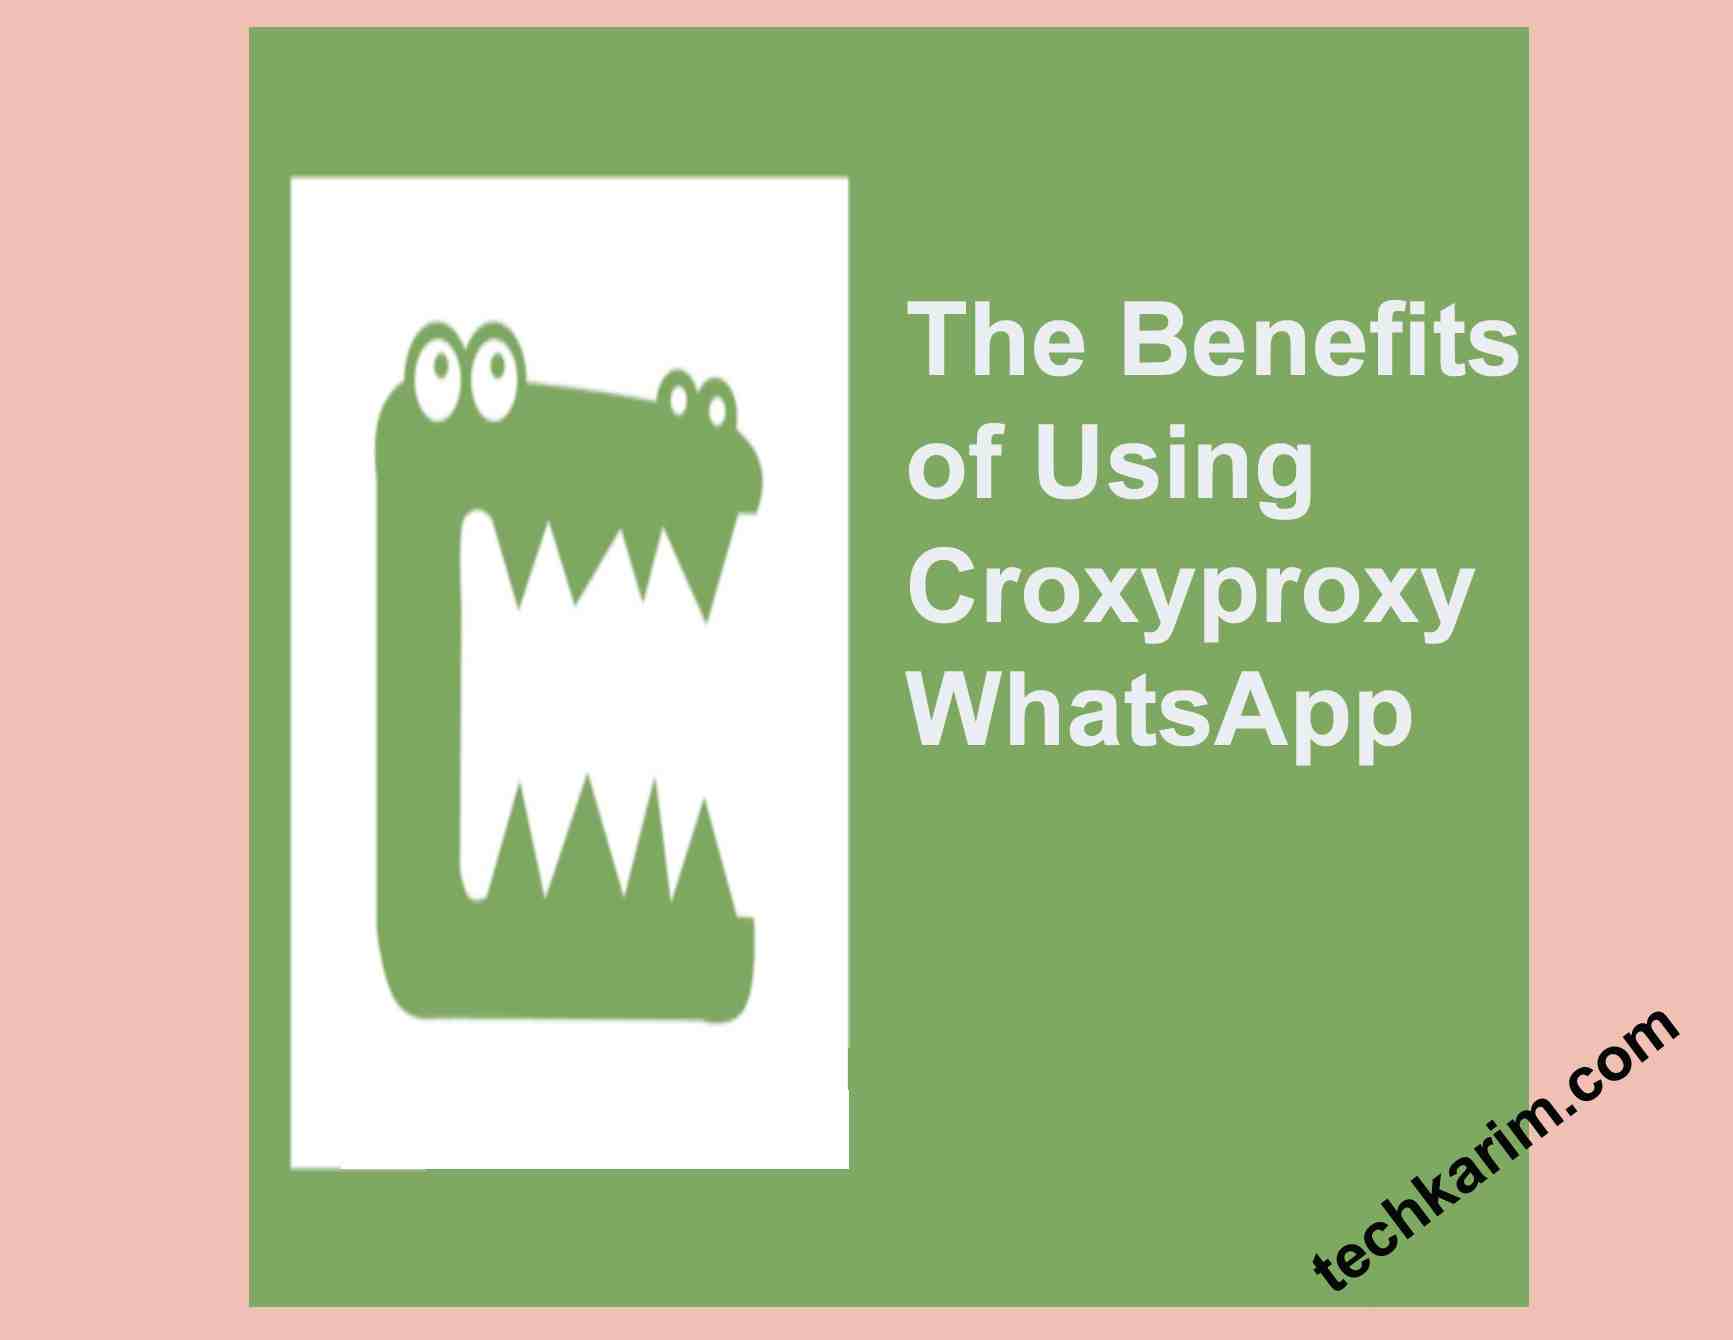 The Benefits of Using Croxyproxy WhatsApp